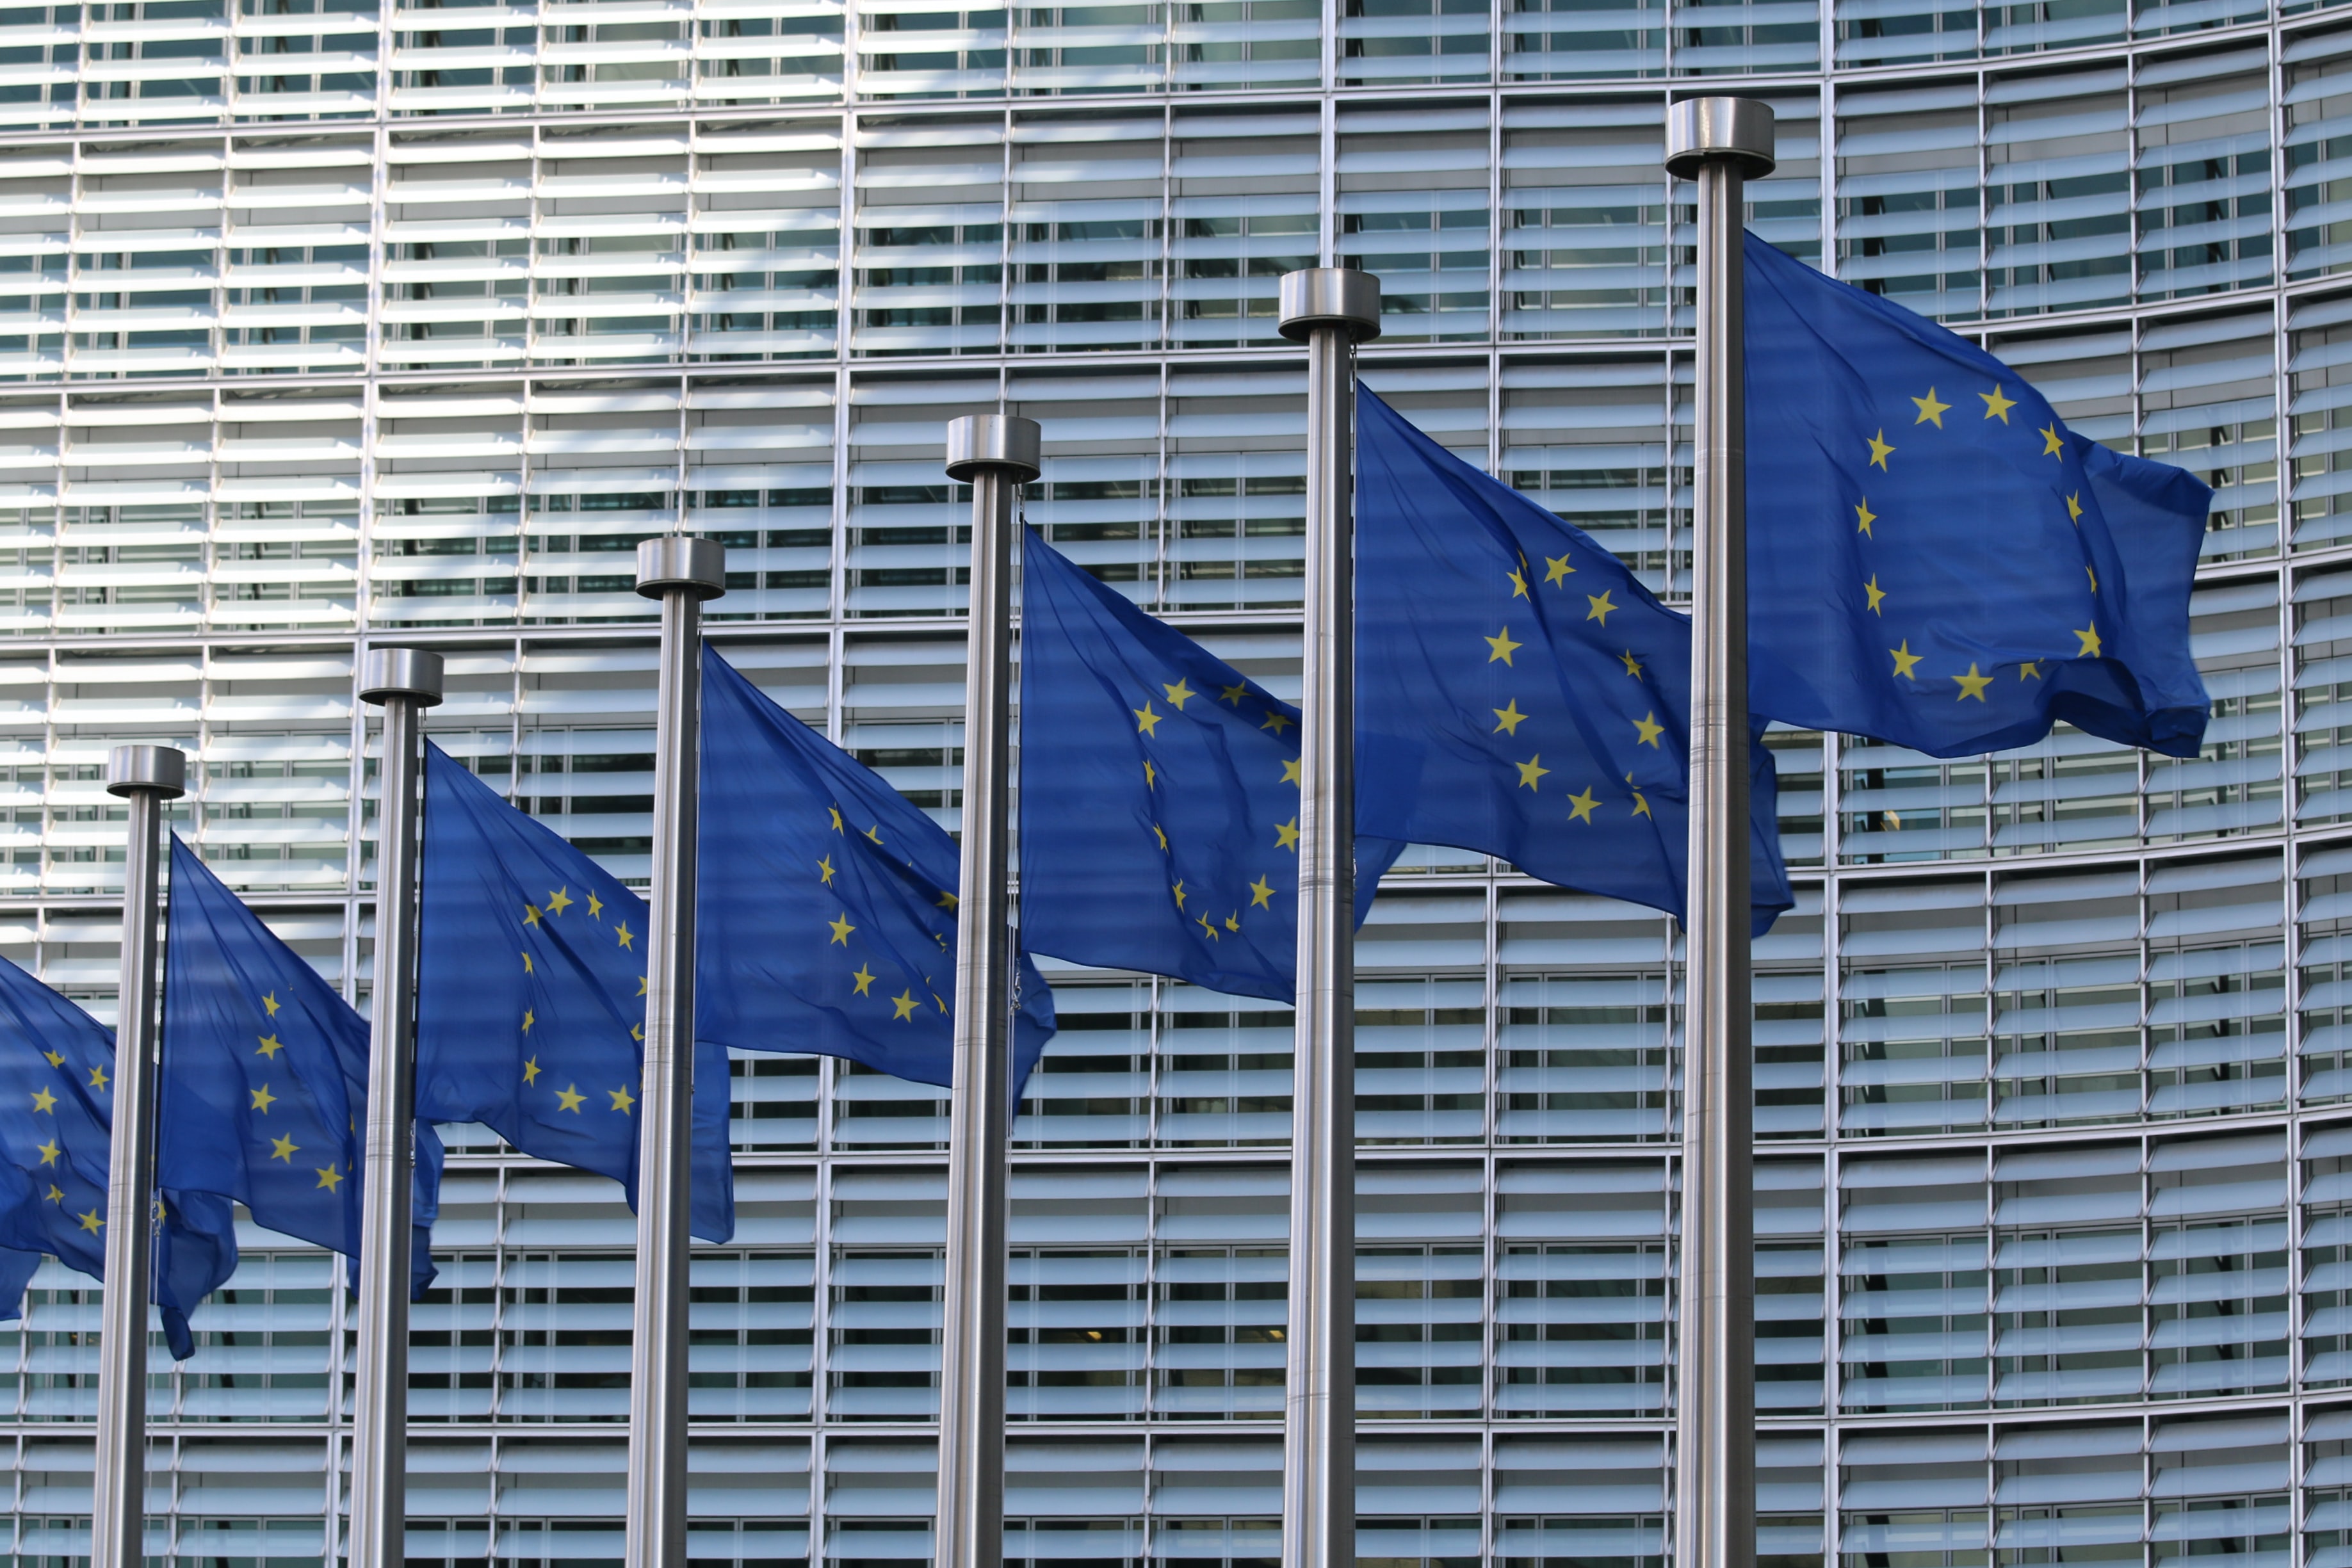 EU flags flying